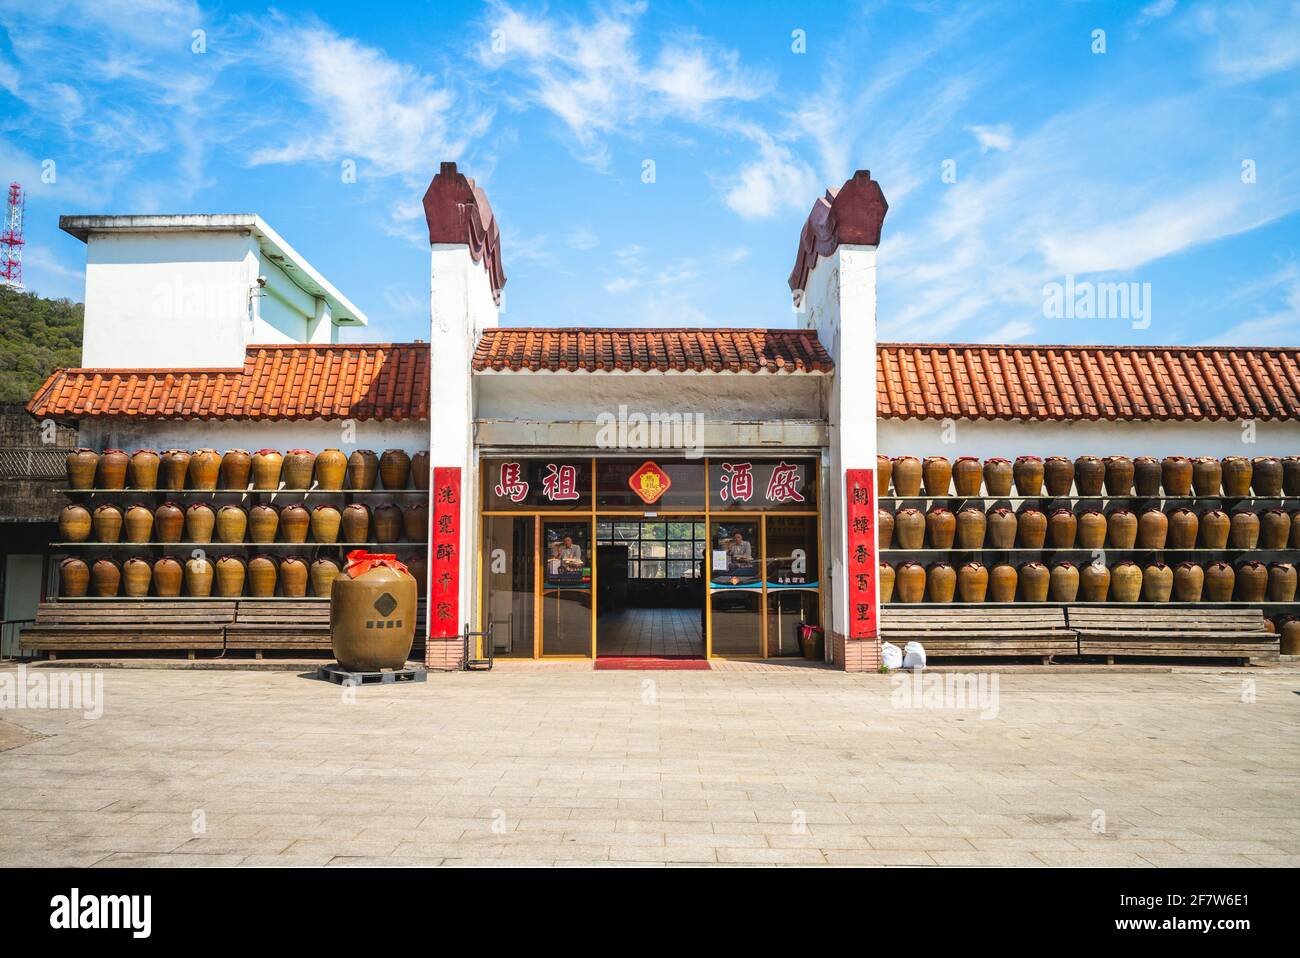 April 7, 2021: Matsu Distillery at nangan island, matsu, taiwan, former Zhongxing Distillery established in 1956 and changed name in 1969n. It is popu Stock Photo